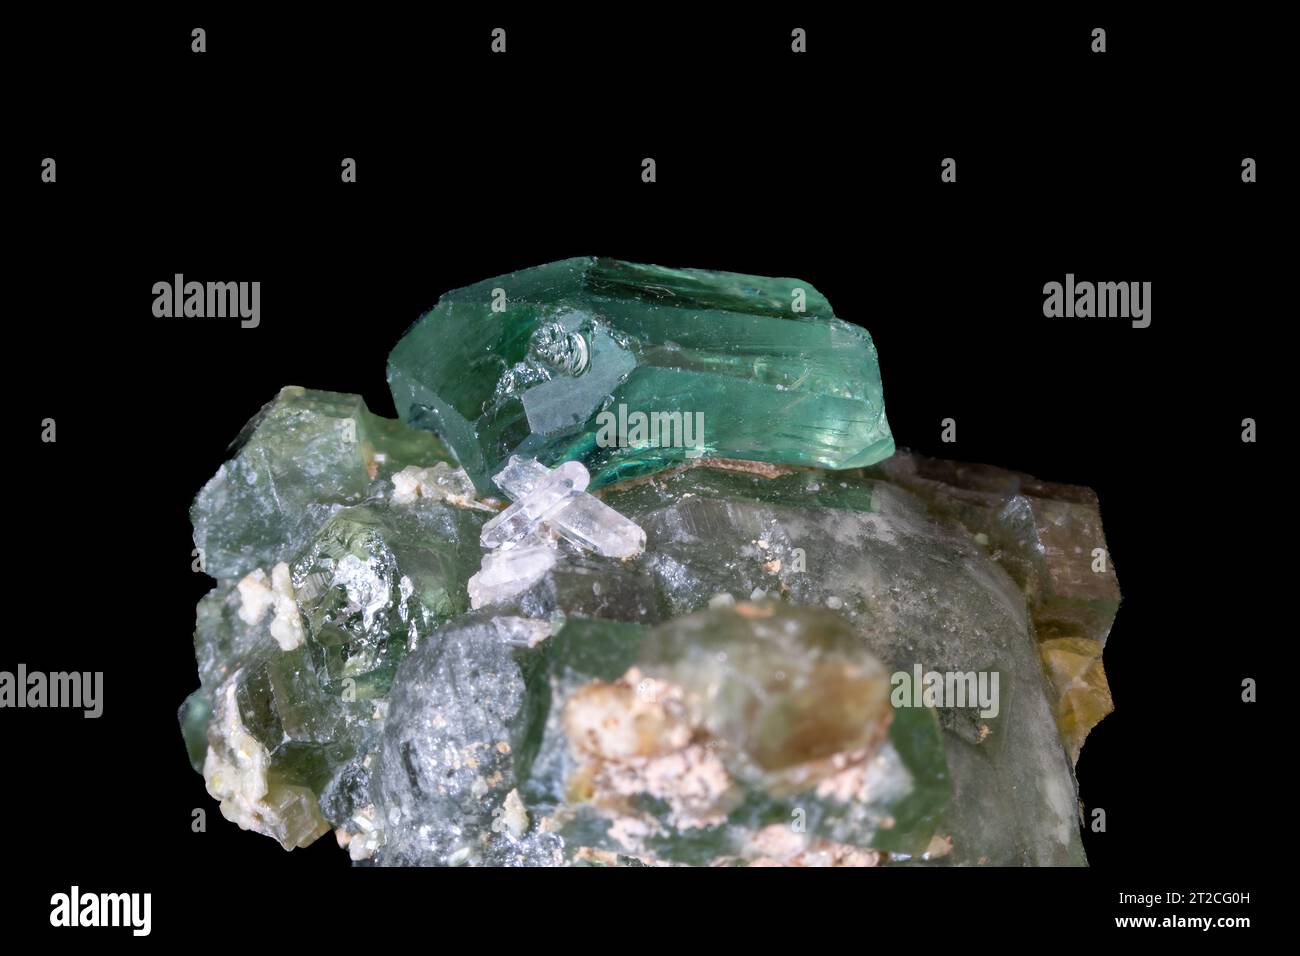 Closeup view of Tsavorite crystal from Tanzania. Set on host rock. Quartz crystals visible. Black background. Stock Photo